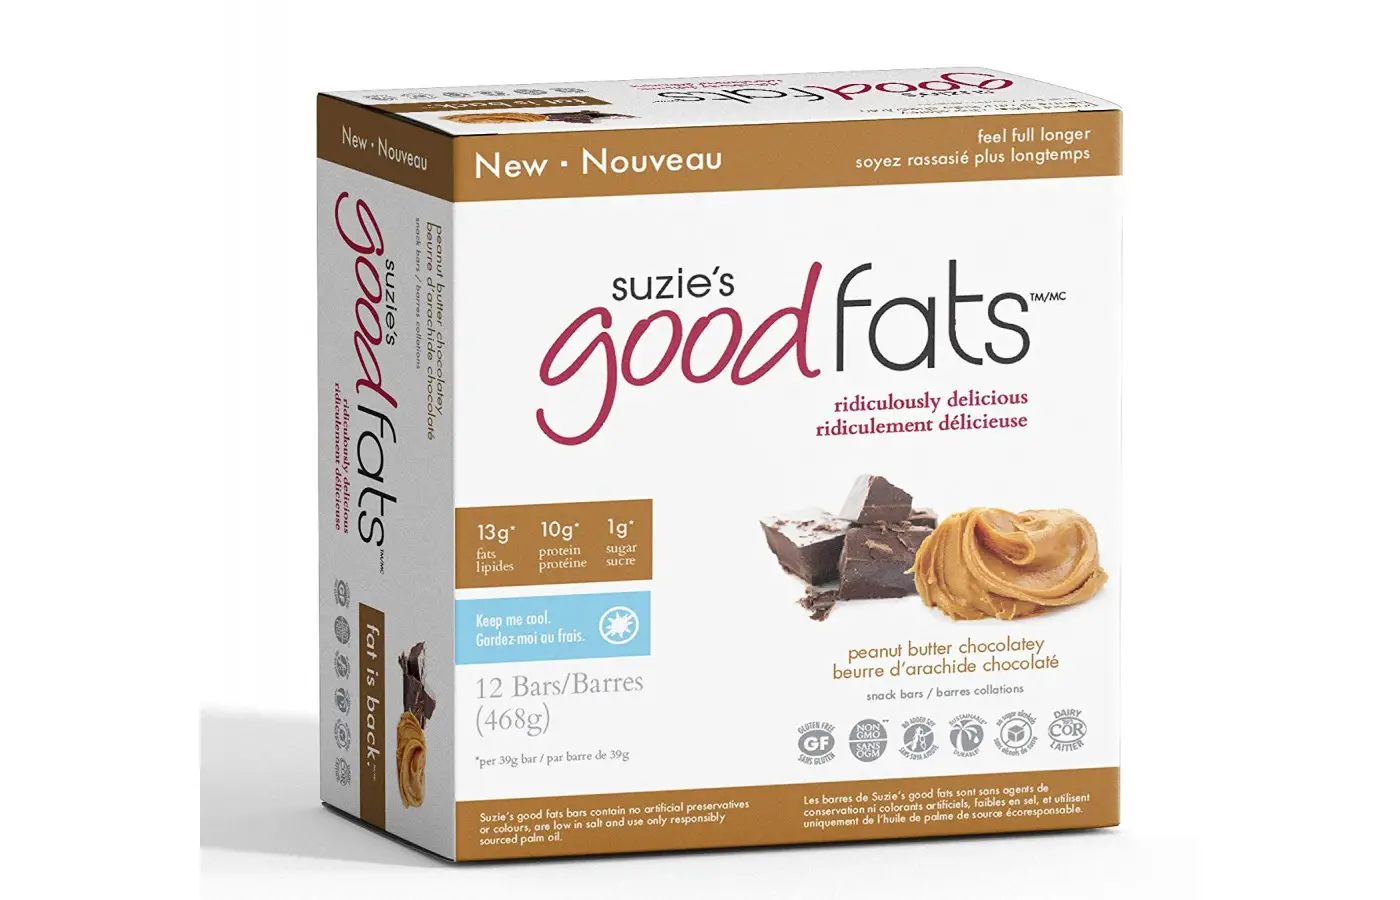 Love good fats box